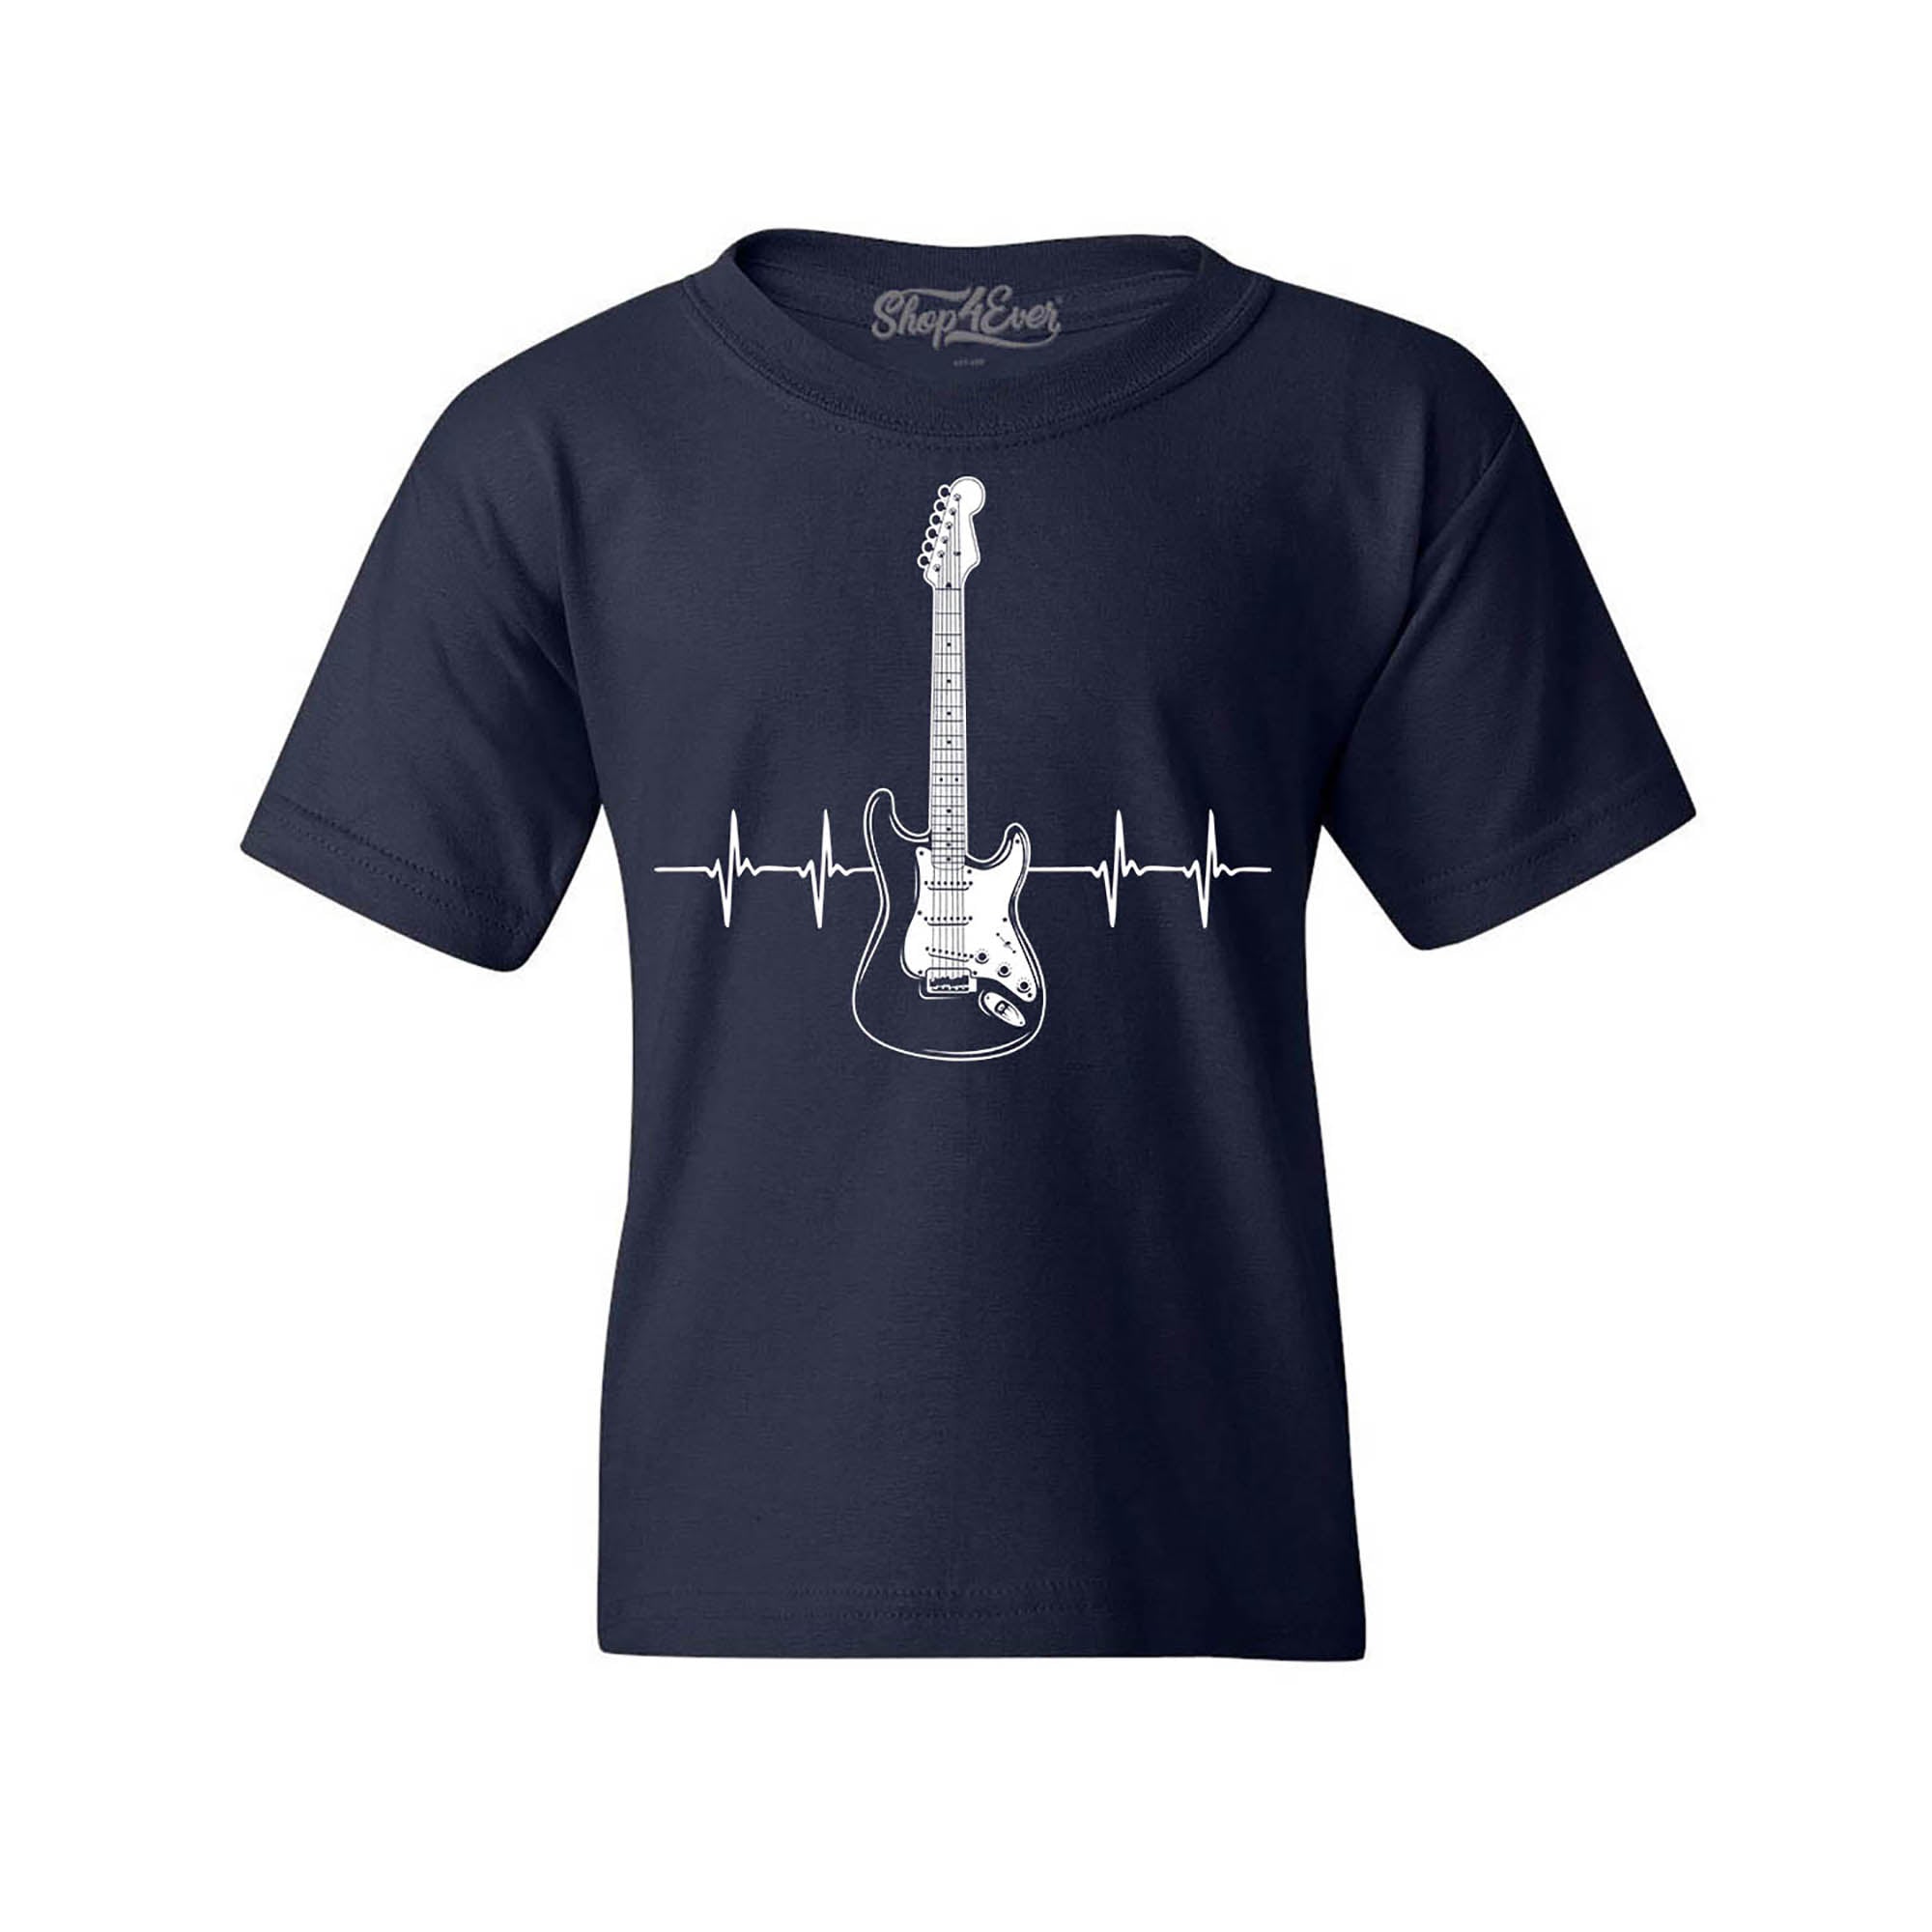 Electric Guitar Heartbeat Musician Youth's T-Shirt